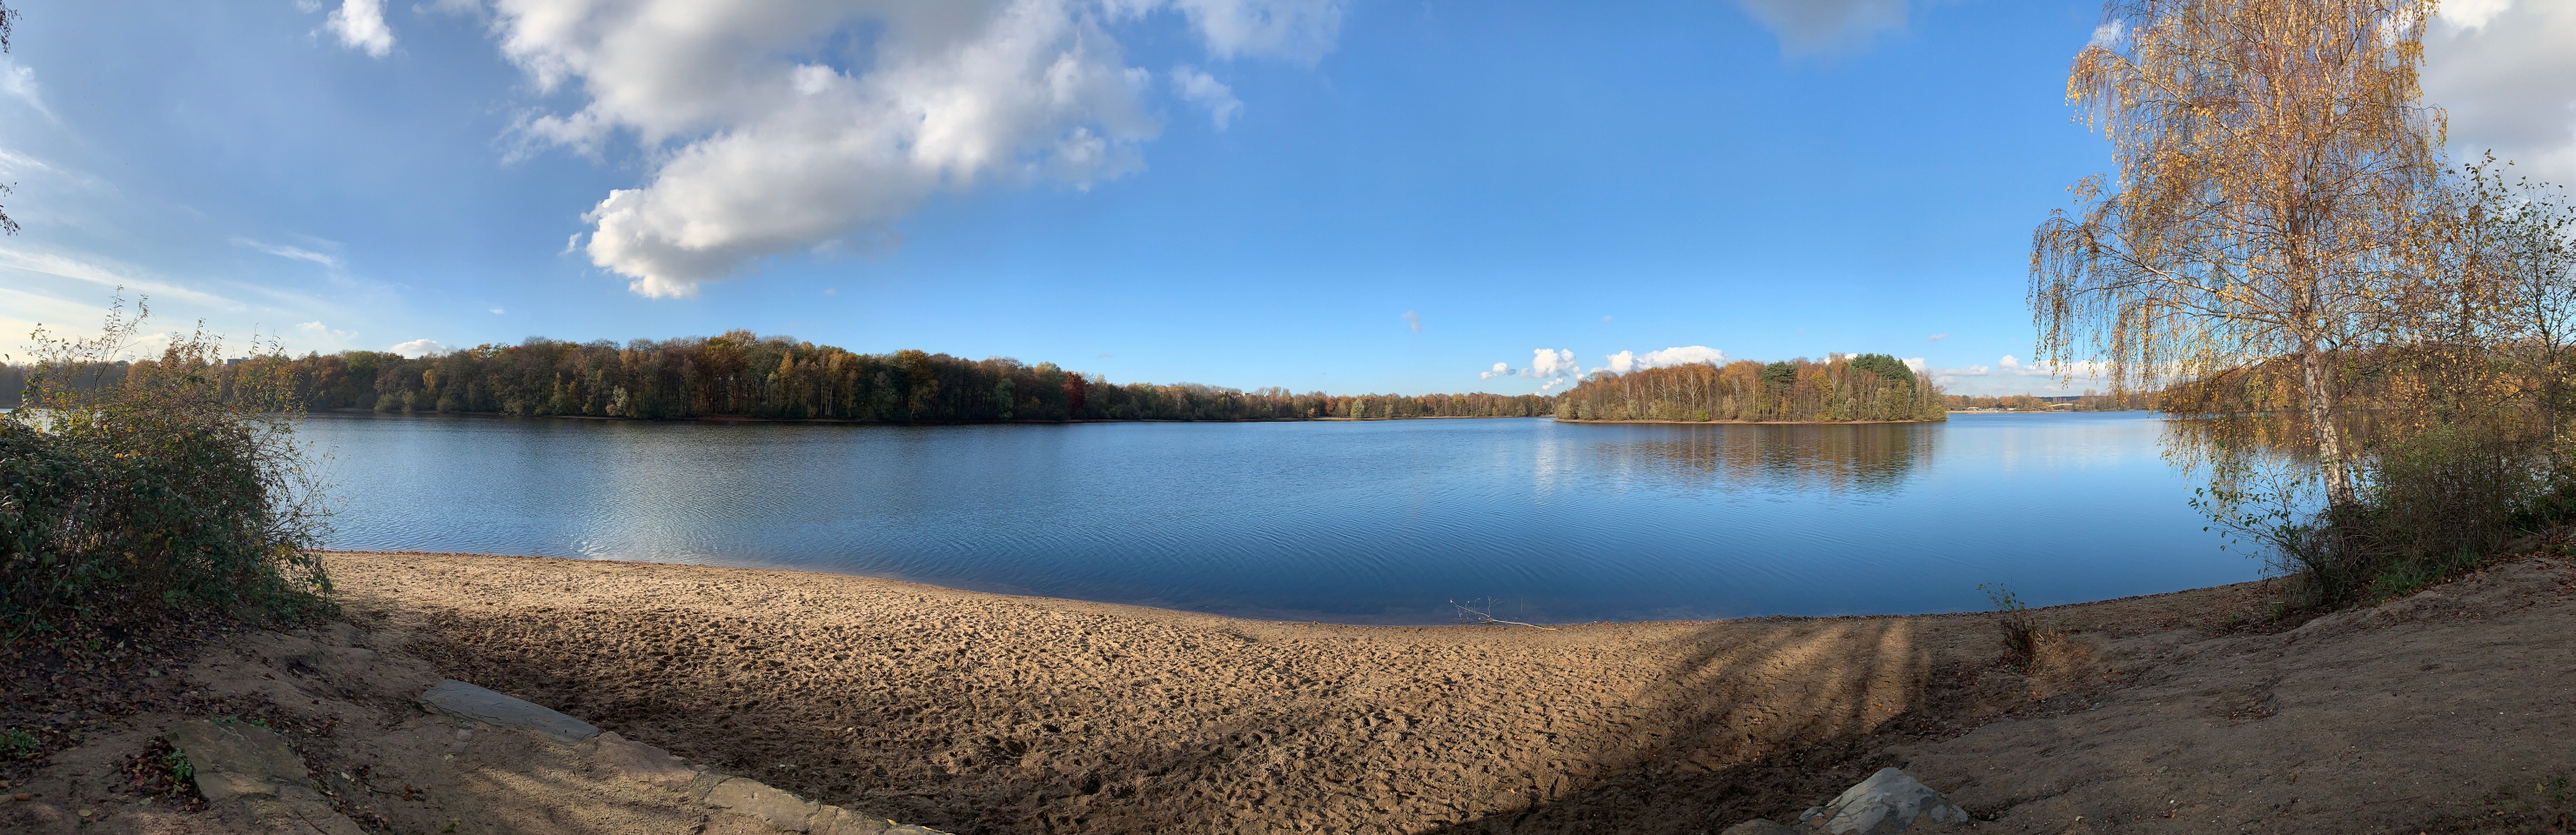 Panorama-2960x960-Six Lake Greenzone Duisburg 2020 Nov (03)